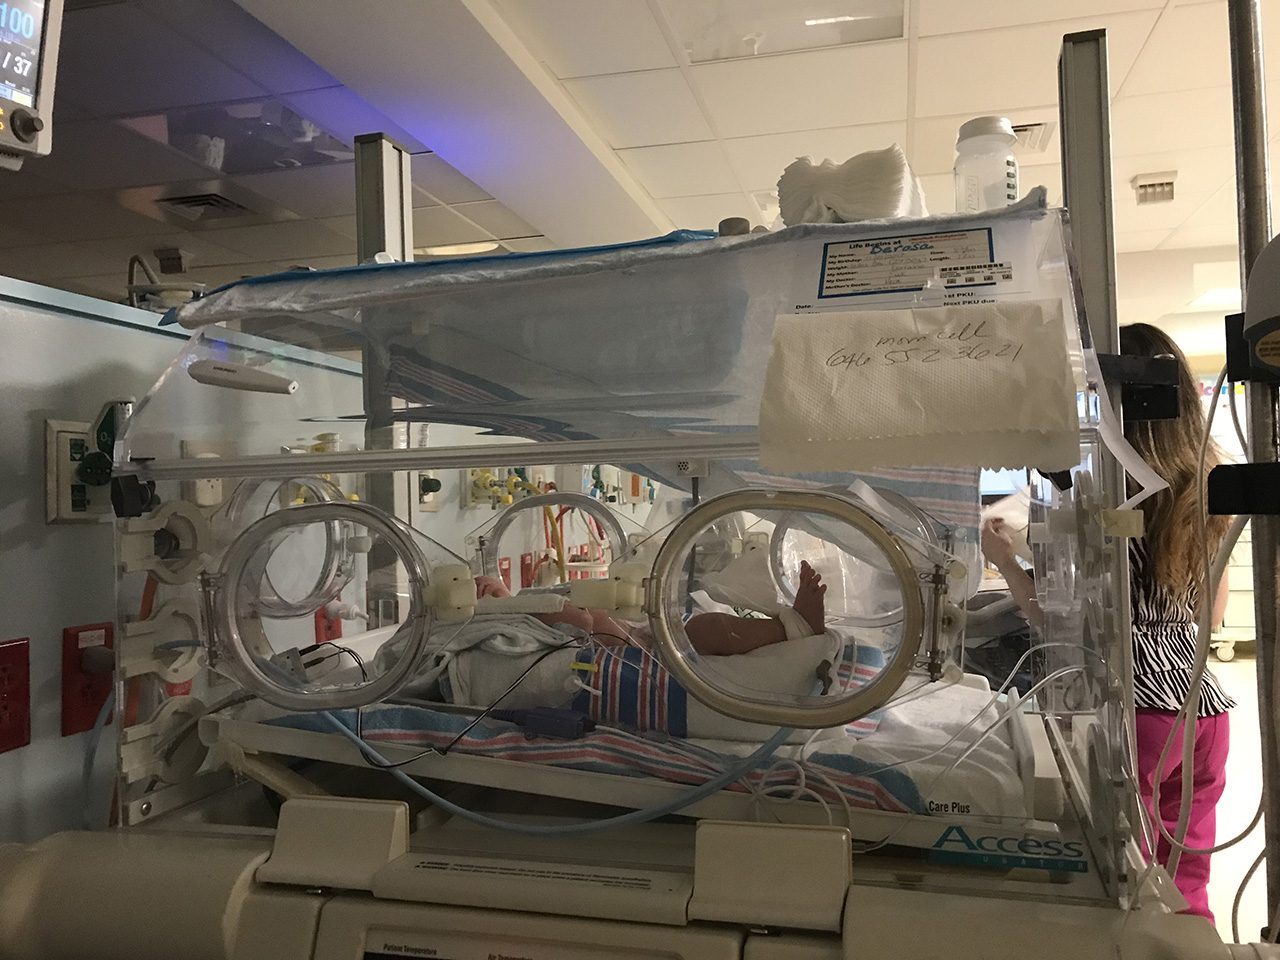 Photo of a premature baby boy in an incubator in the NICU